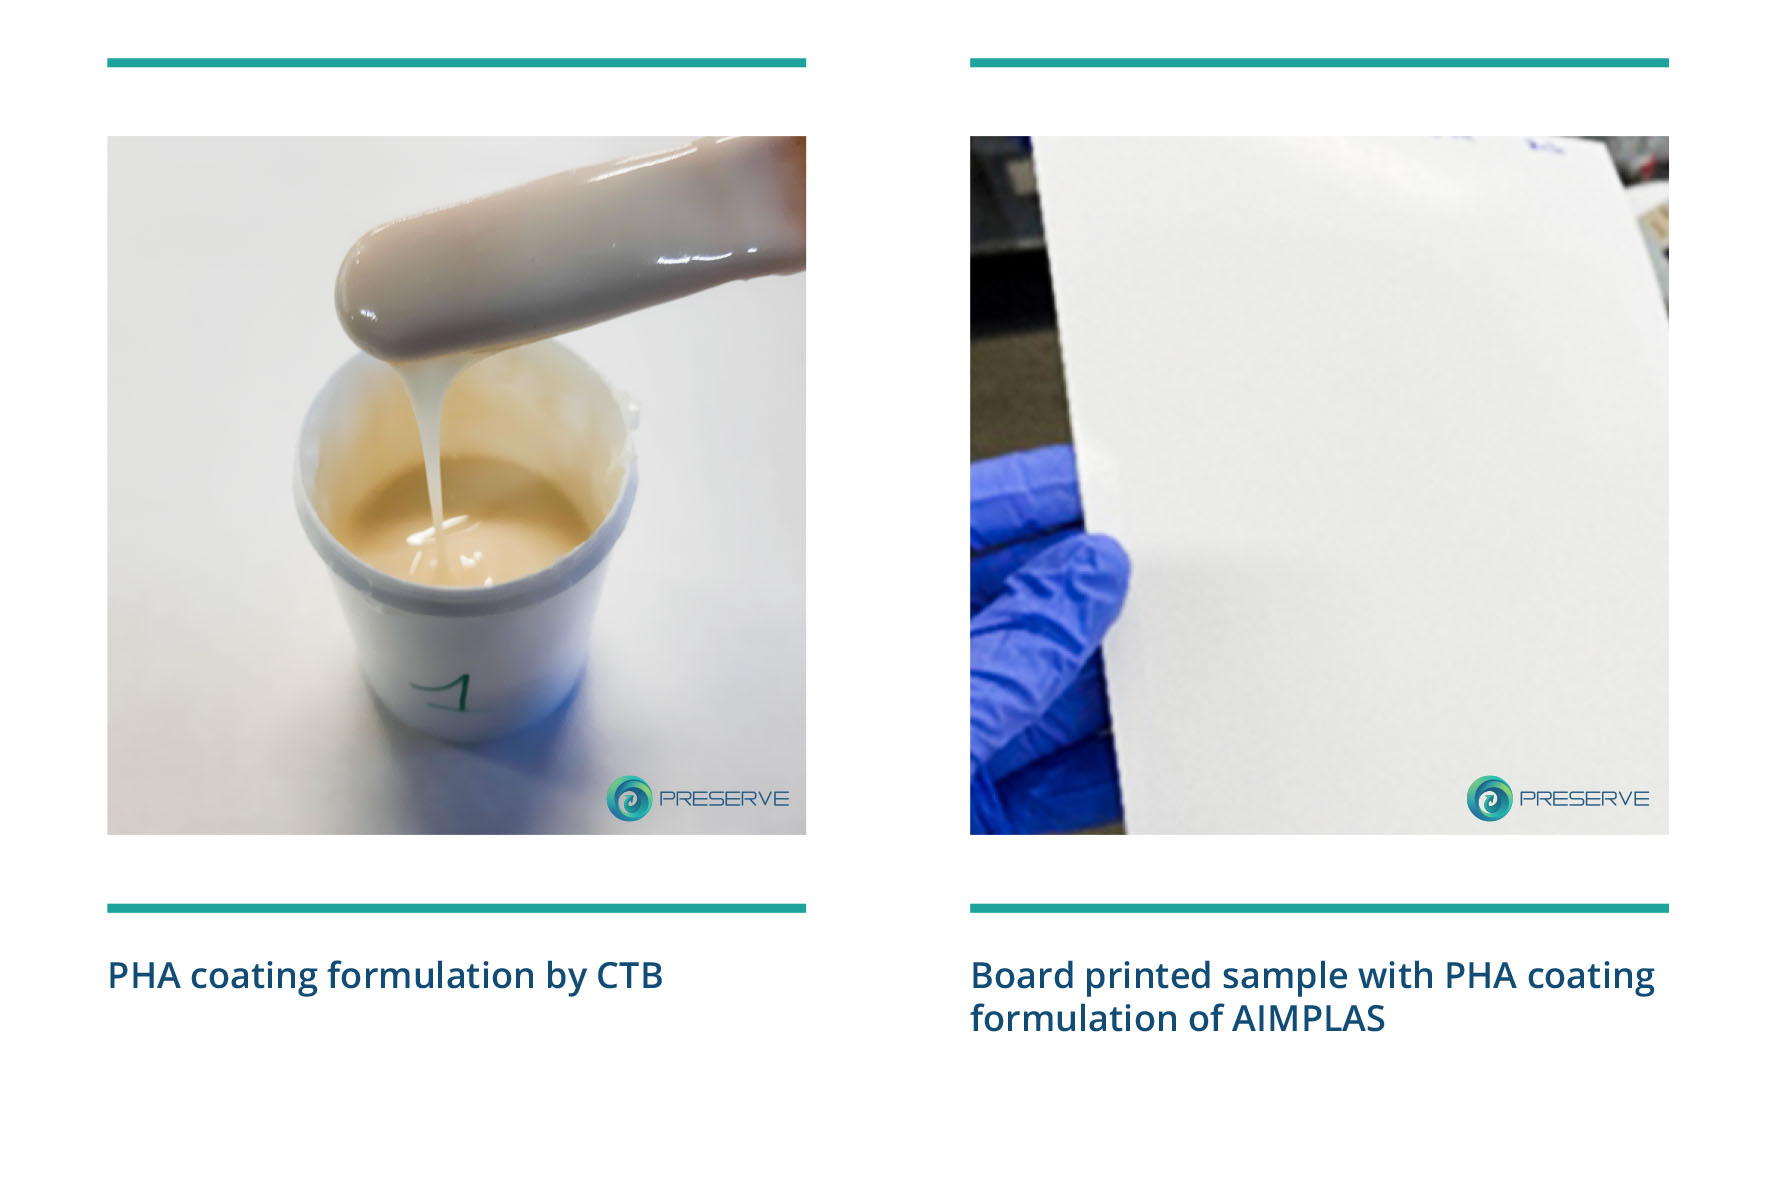 CTB and aimplas formulations